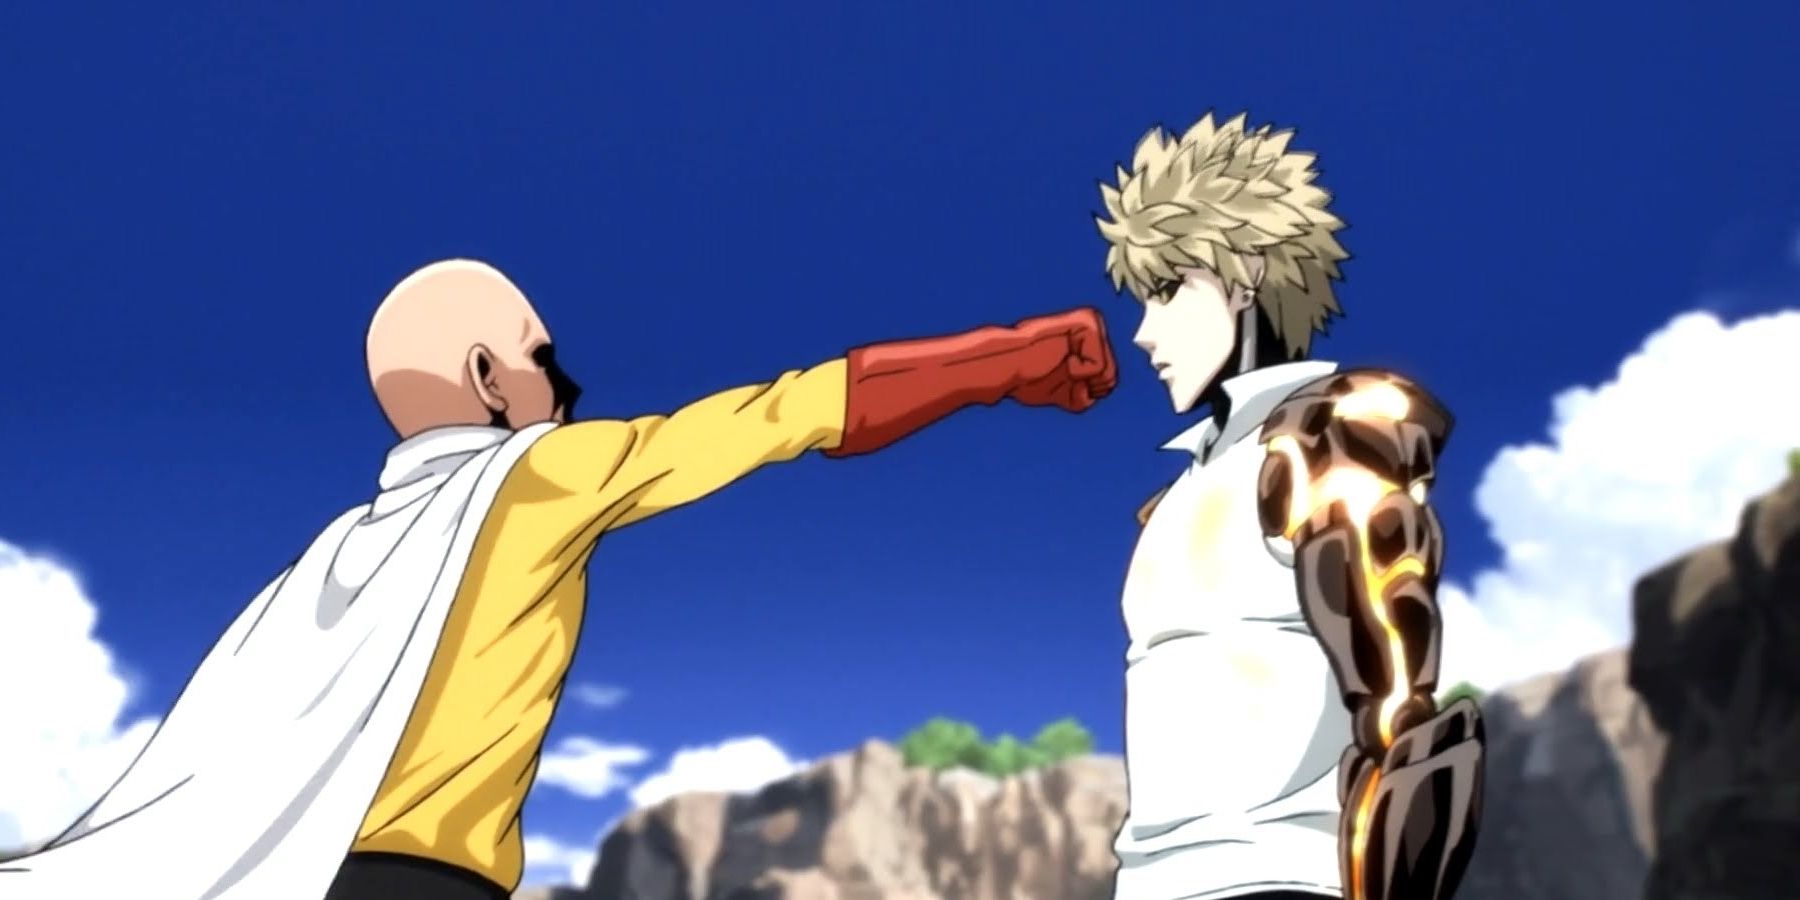 Genos and Saitama fighting